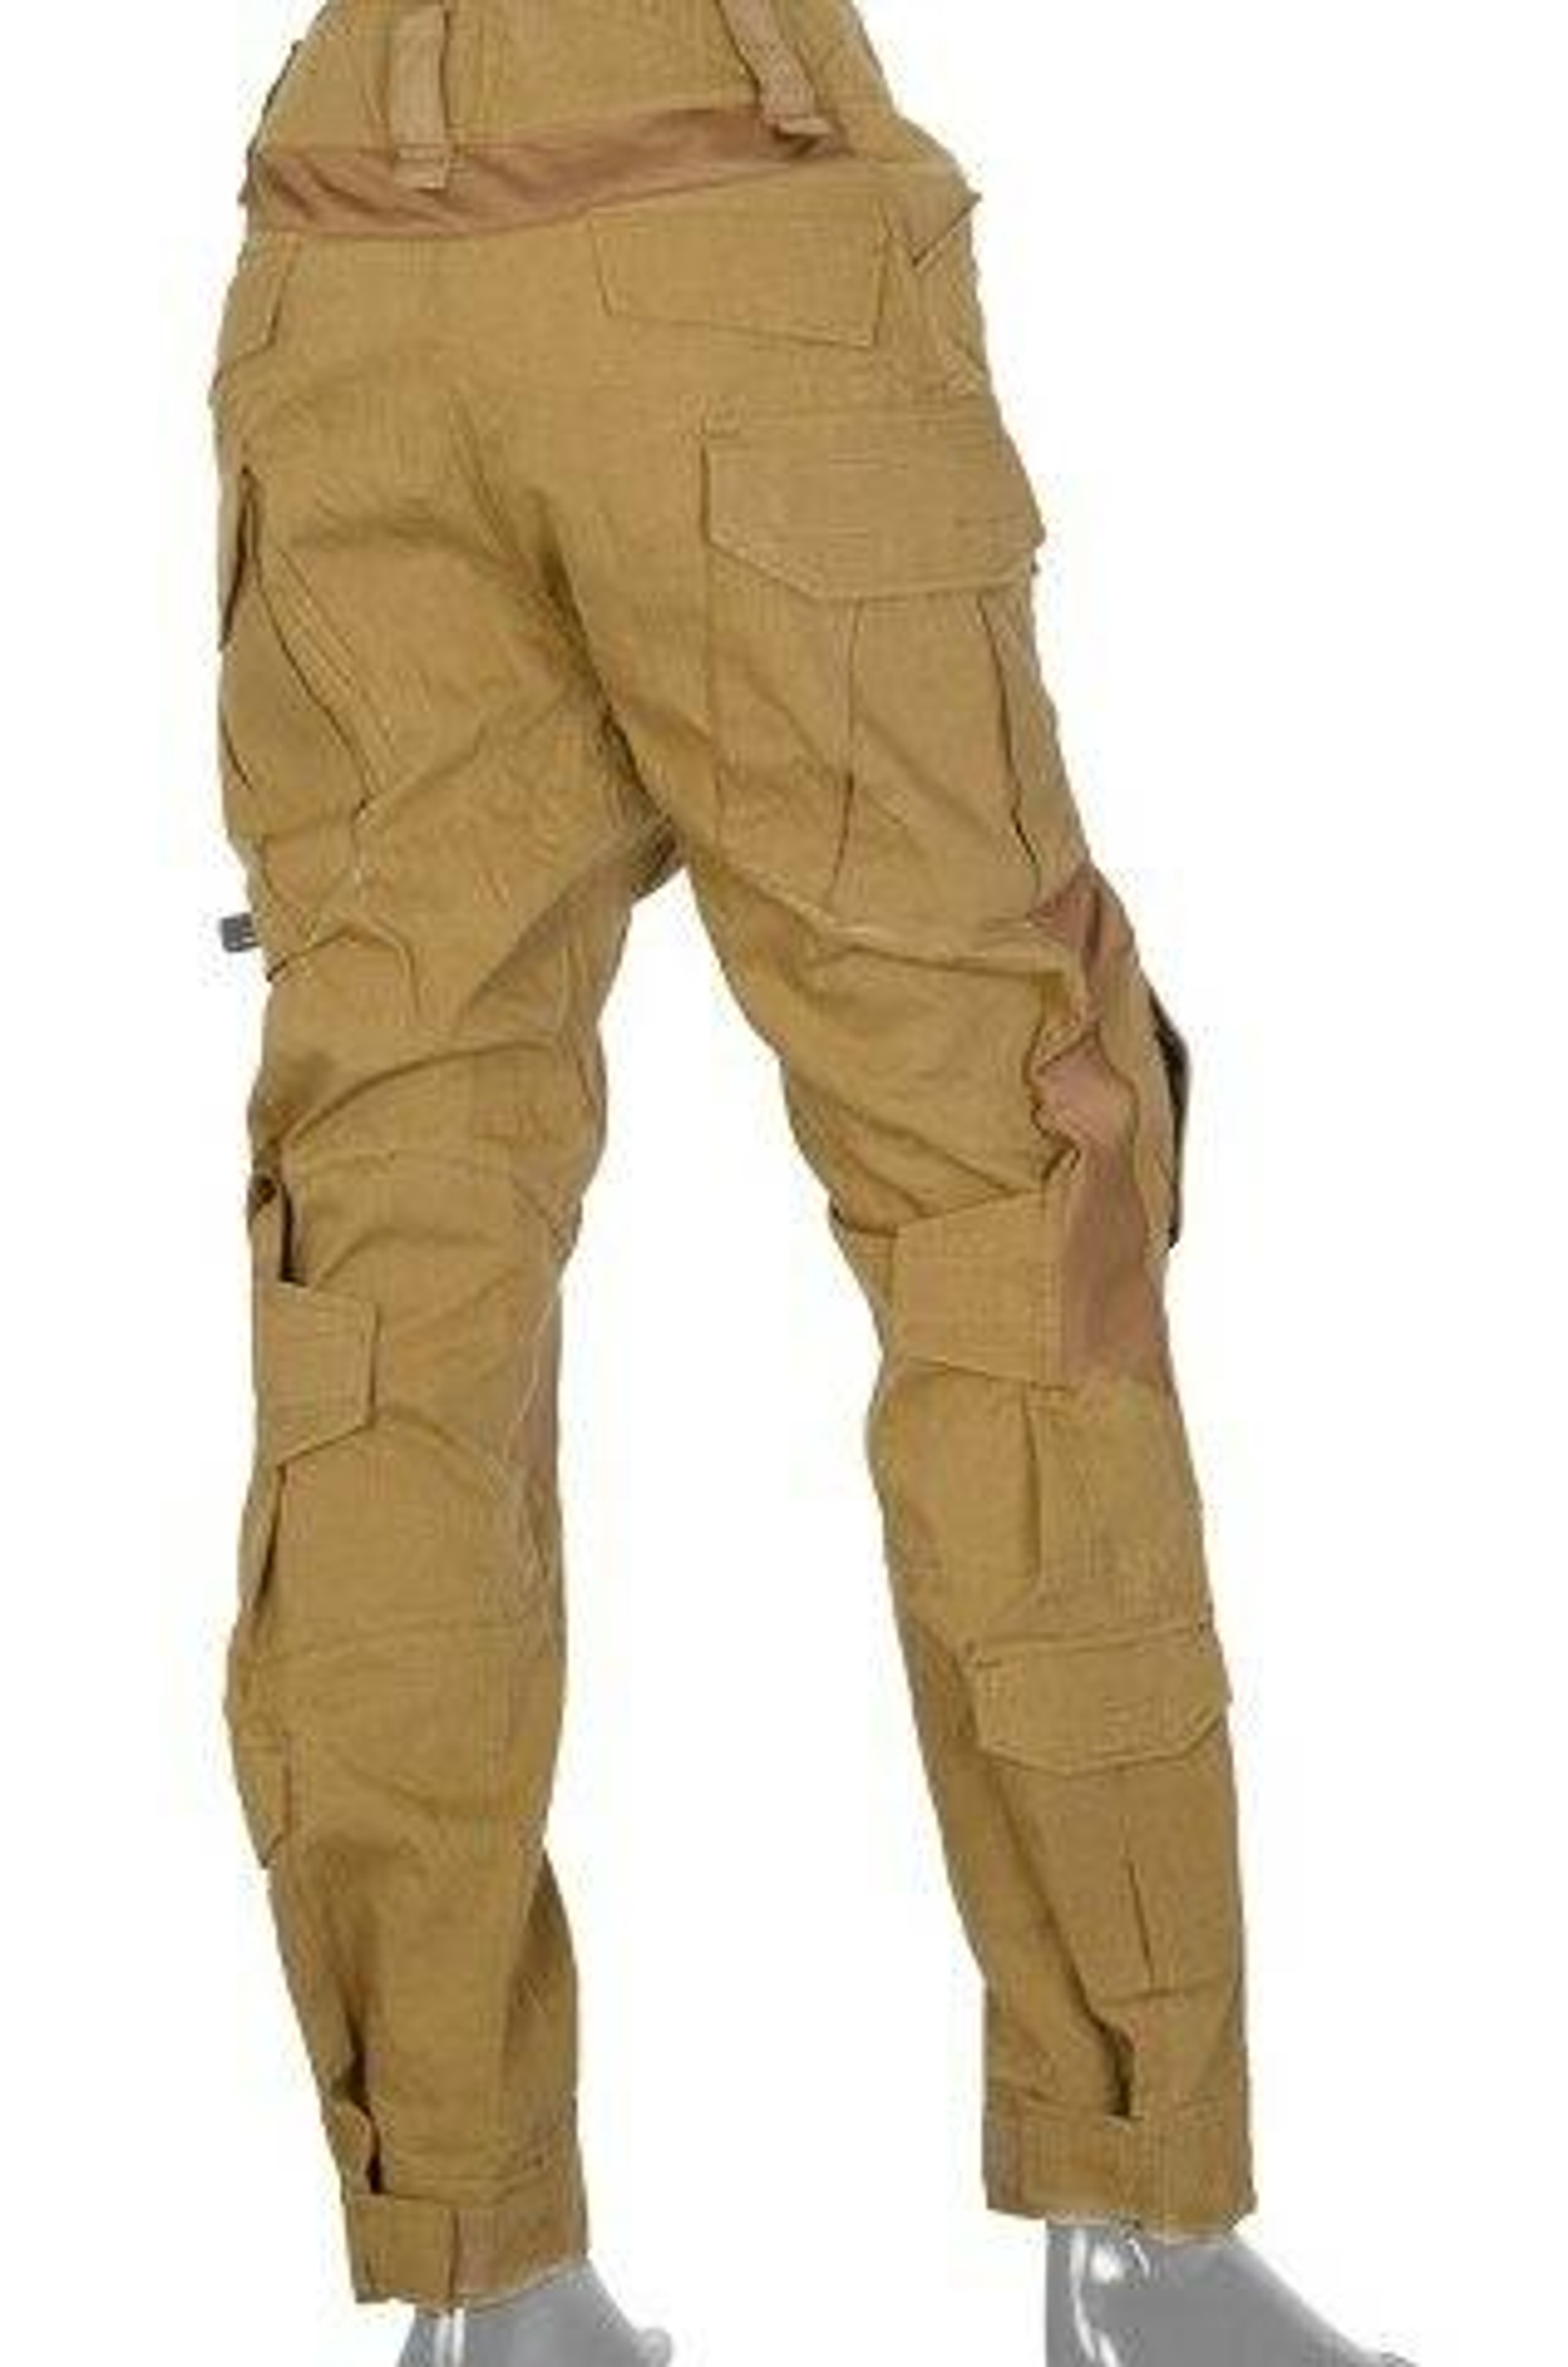 UK Arms Tactical Combat Uniform BDU Pants w/ Knee Pads, Coyote Brown